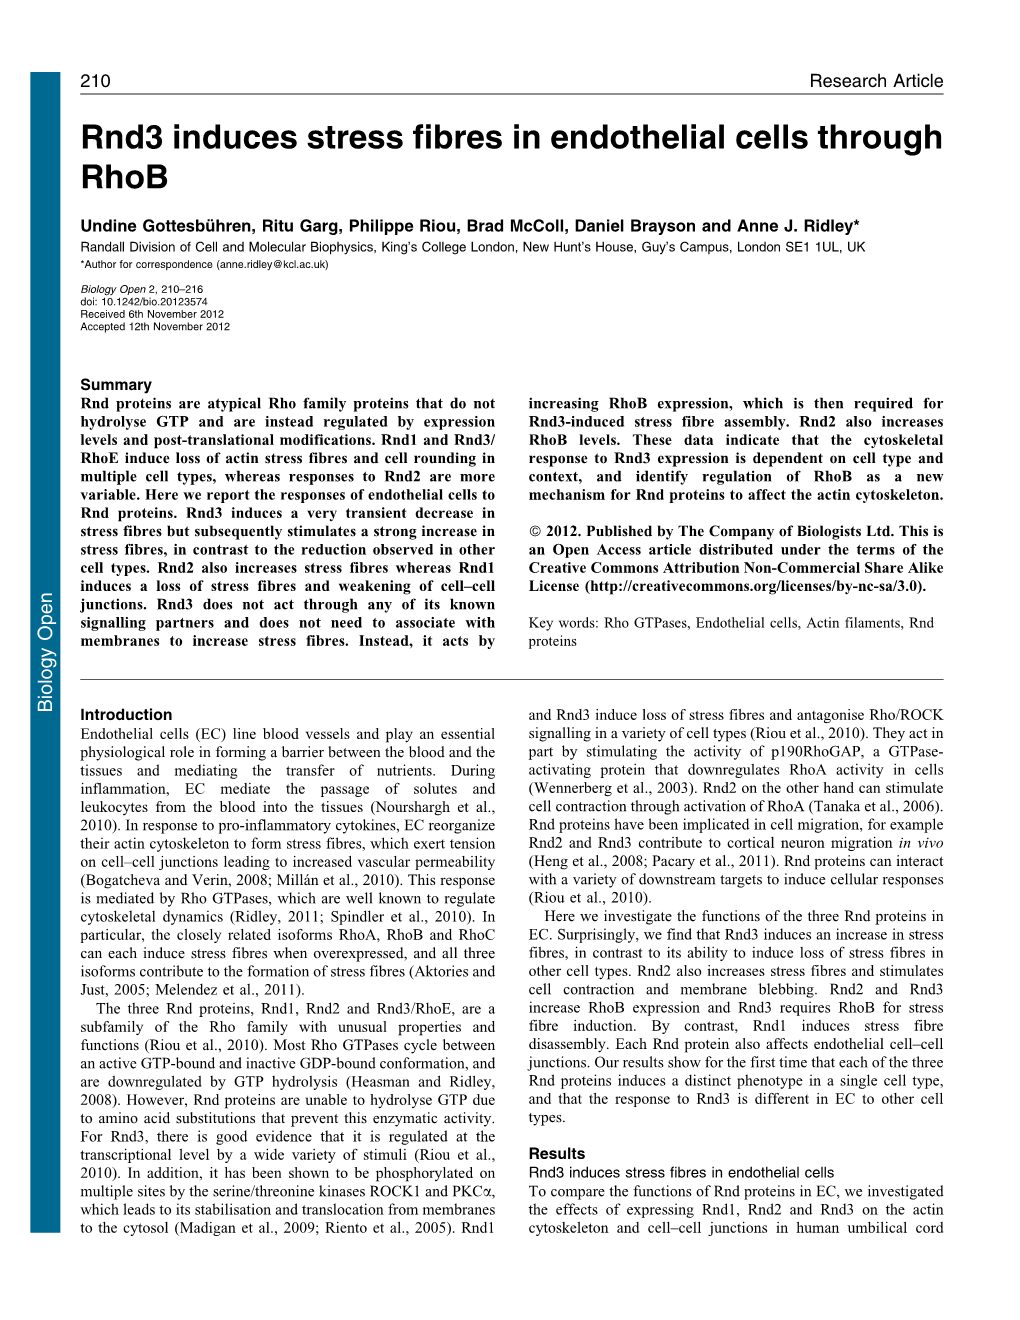 Rnd3 Induces Stress Fibres in Endothelial Cells Through Rhob